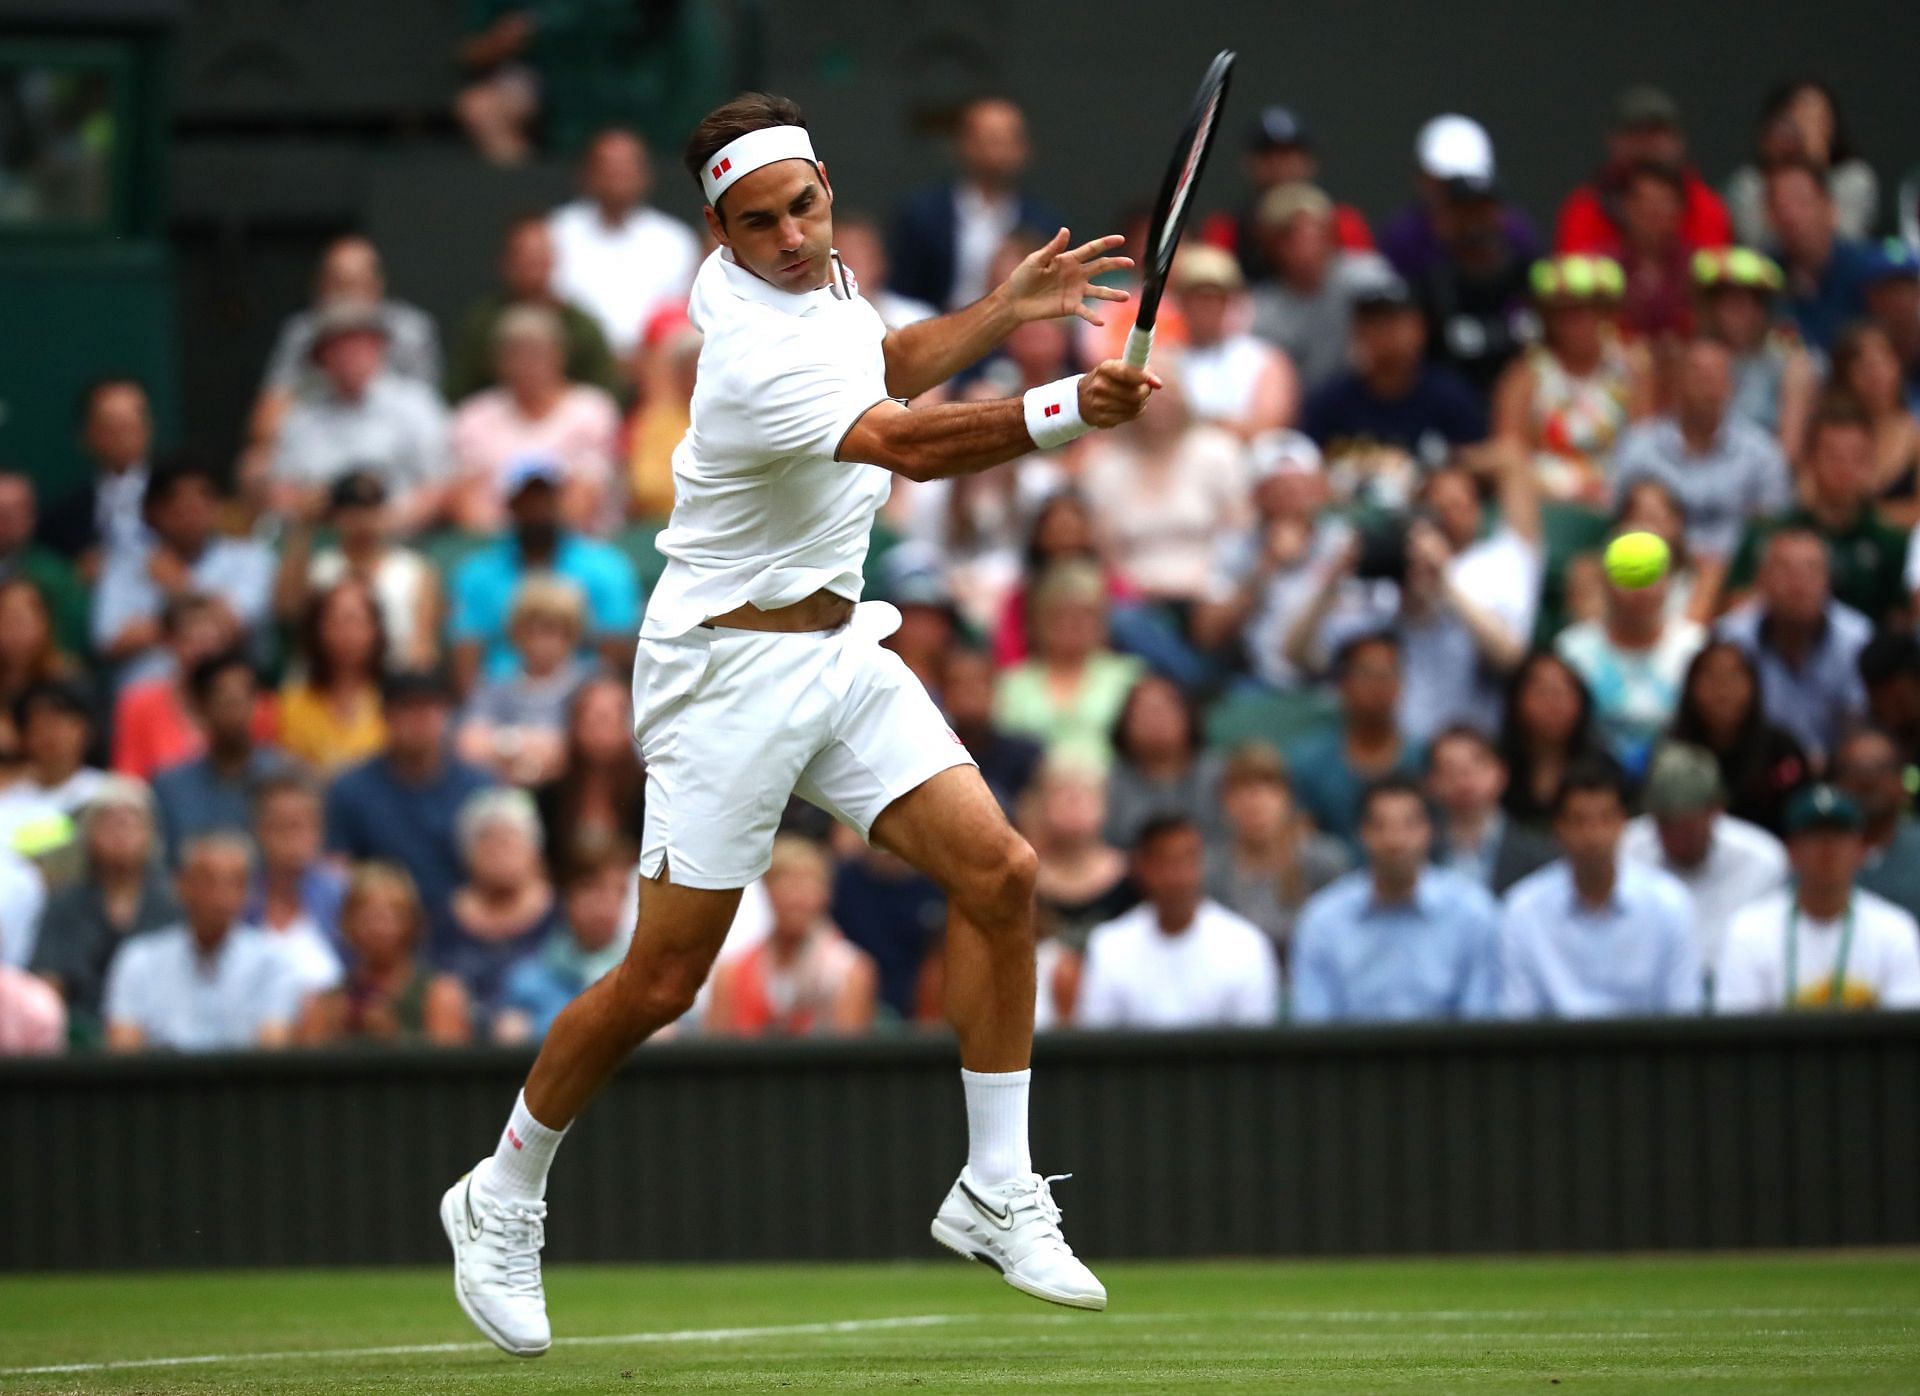 Roger Federer in action against Matteo Berrettini at Wimbledon 2019